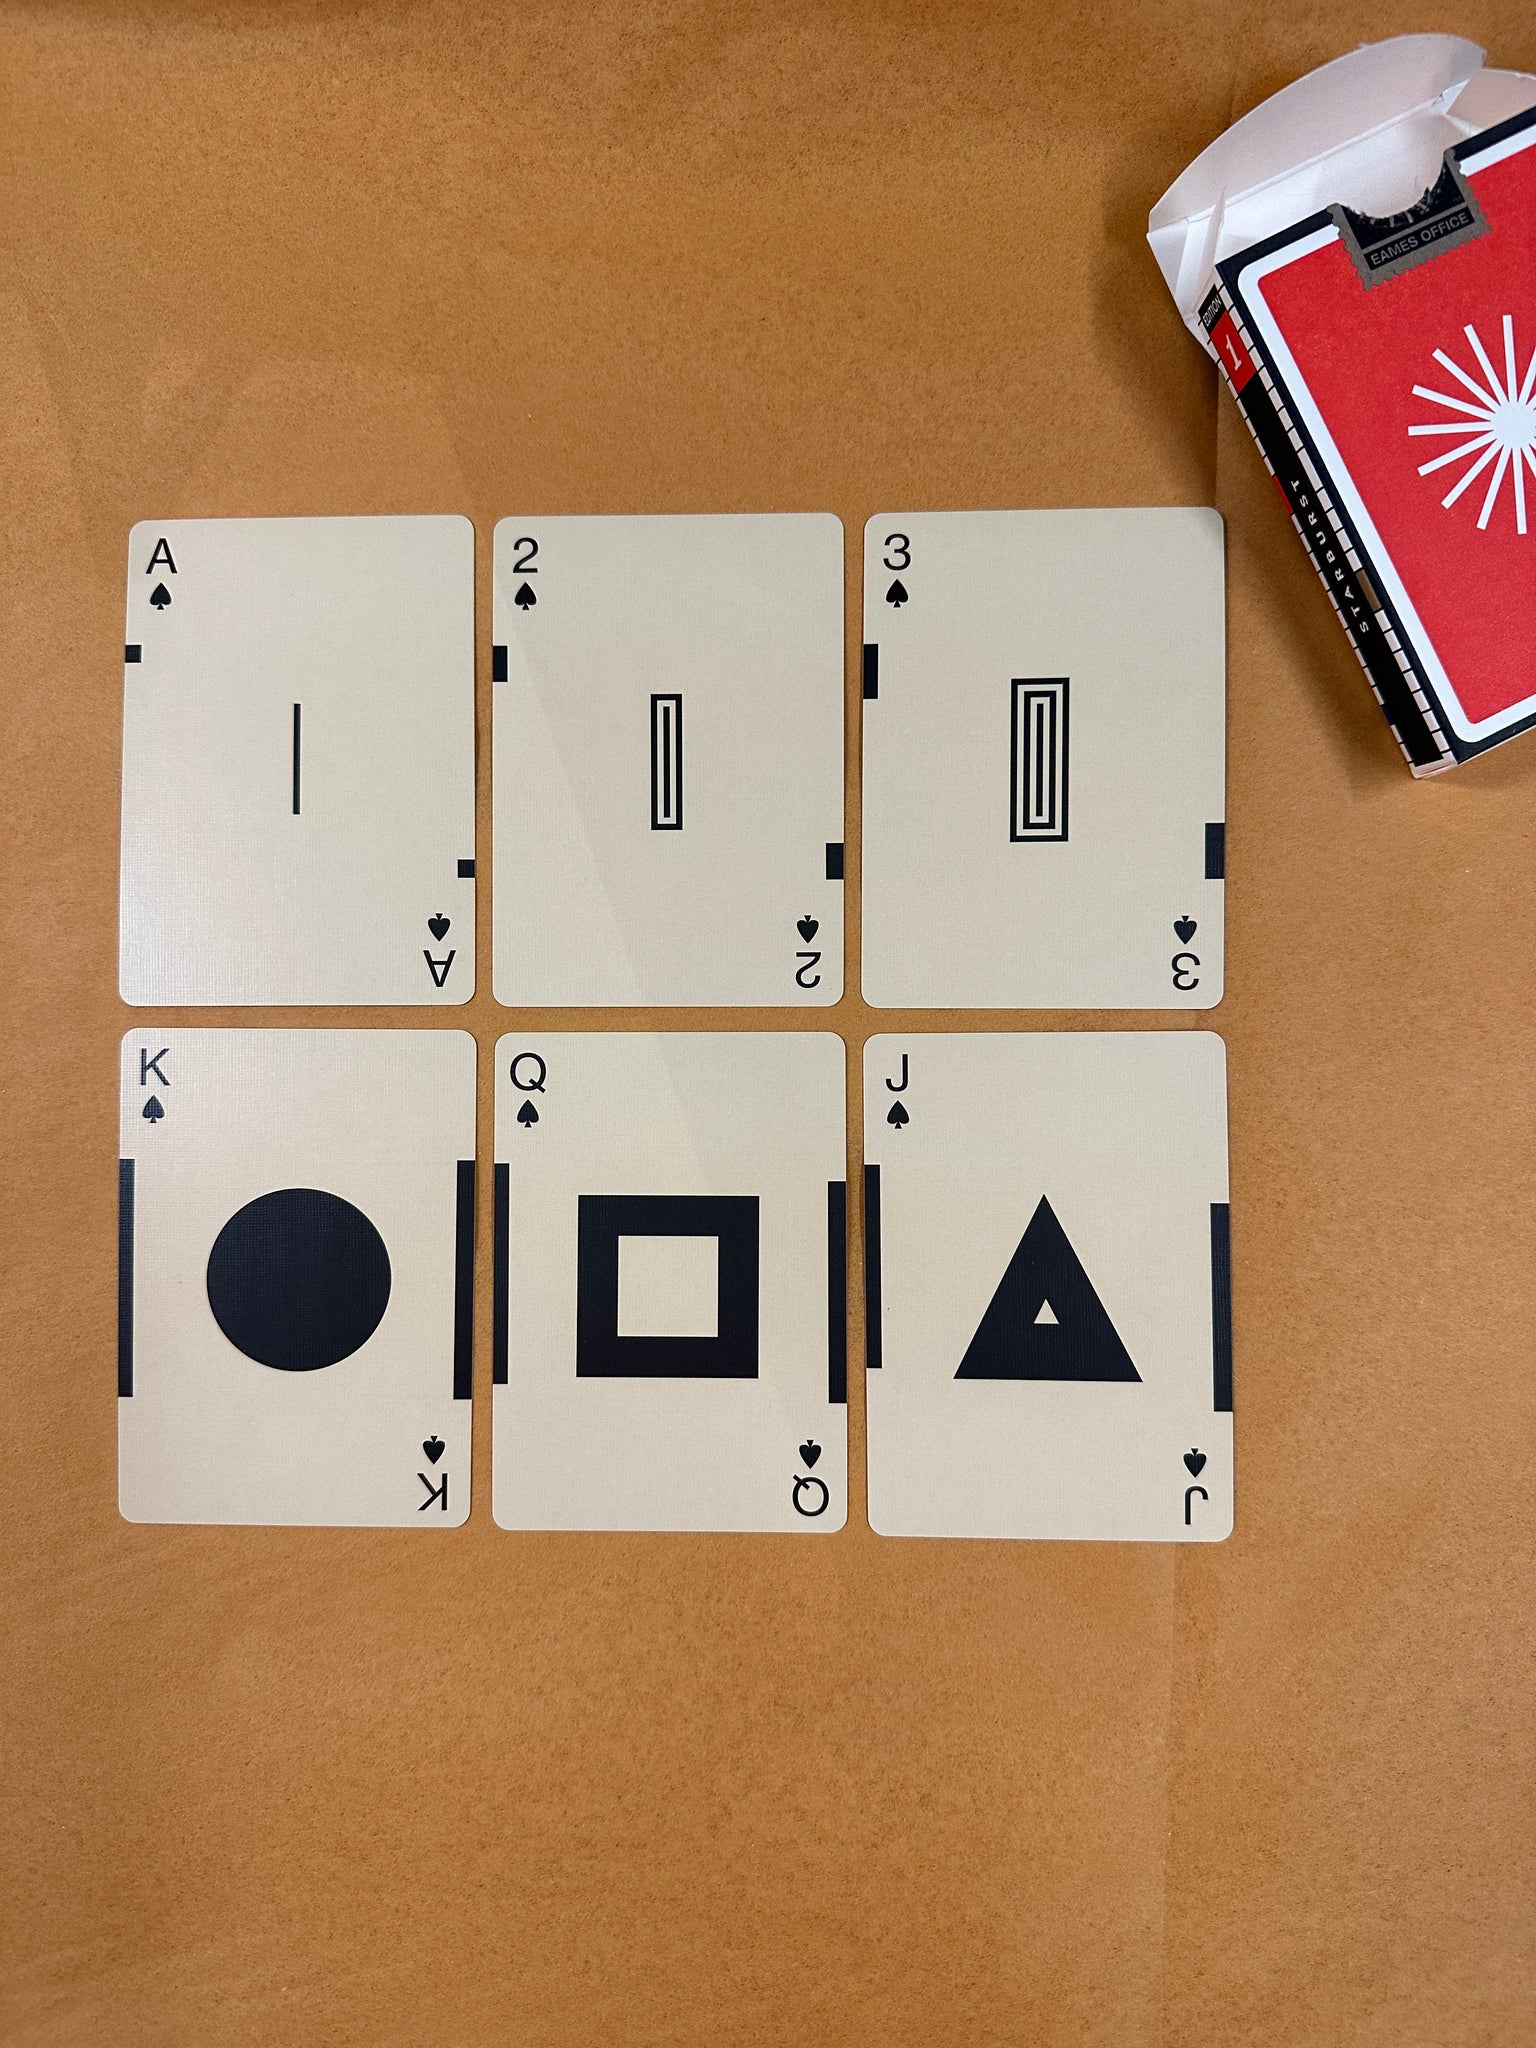 Eames "Starburst" Playing Cards